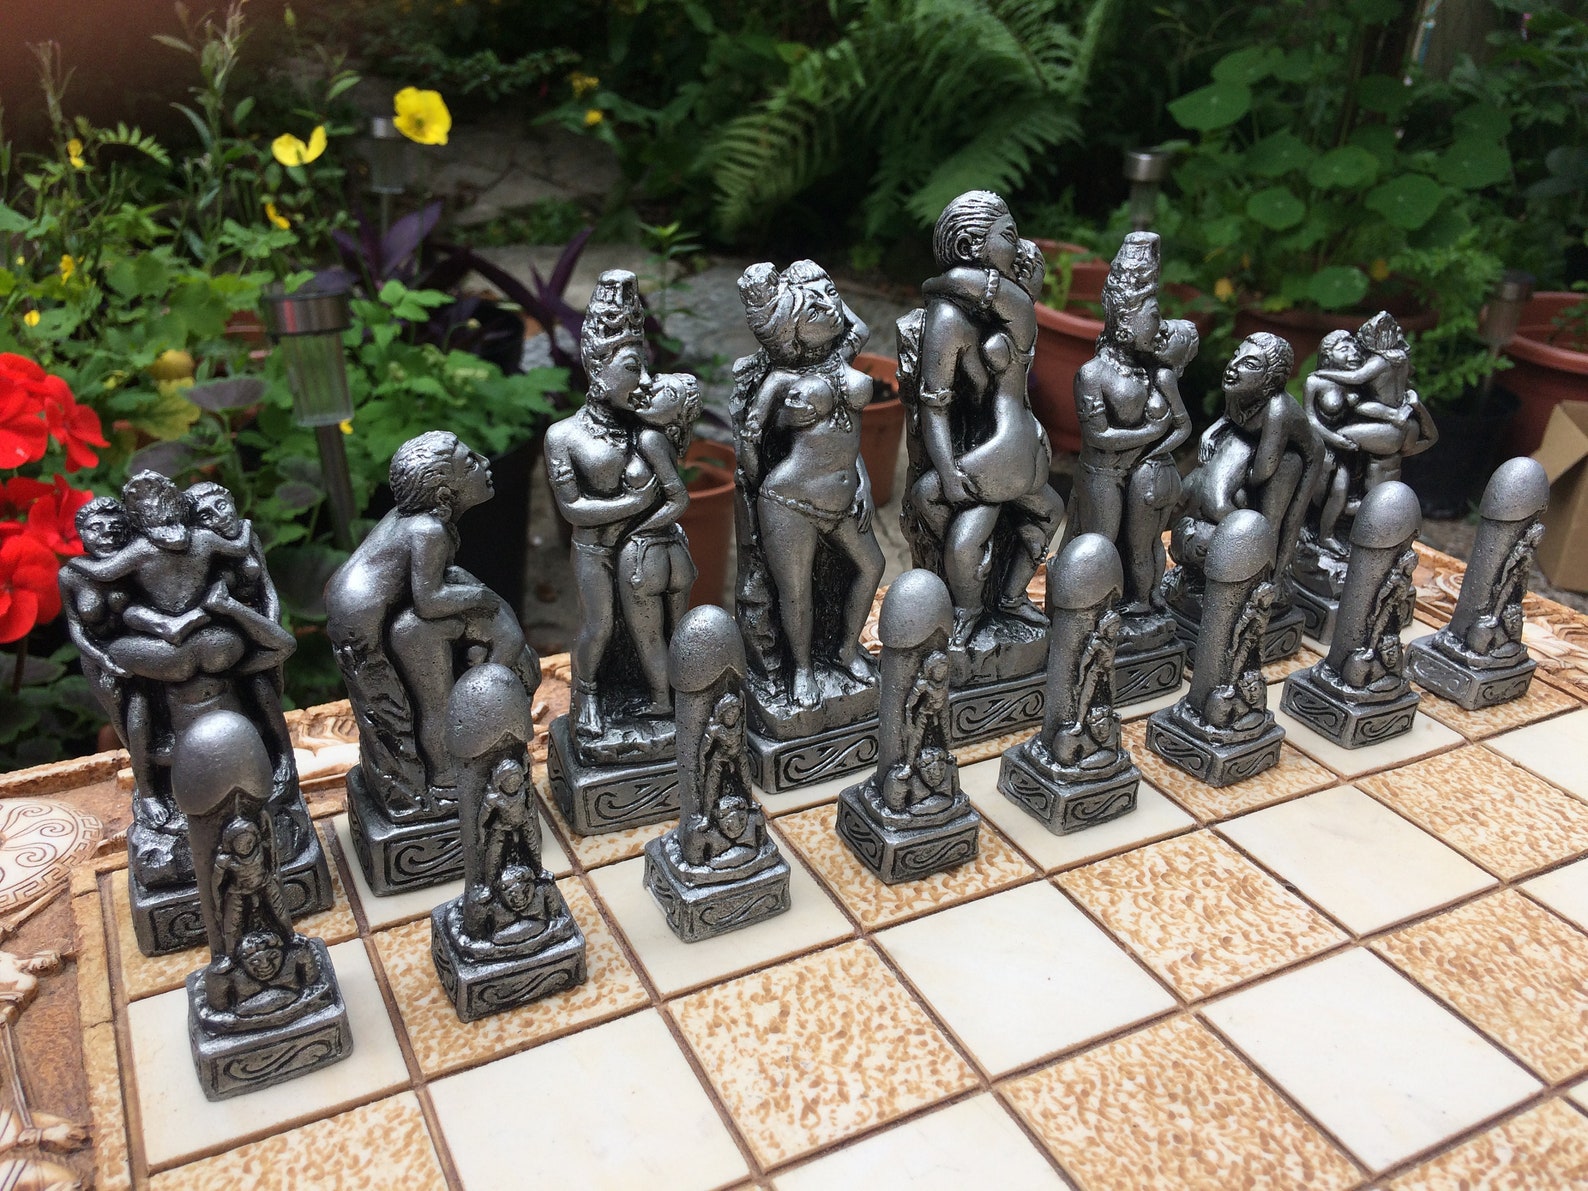 Detailed Erotic Chess Set Kama Sutra Themed Chess Set Based Etsy